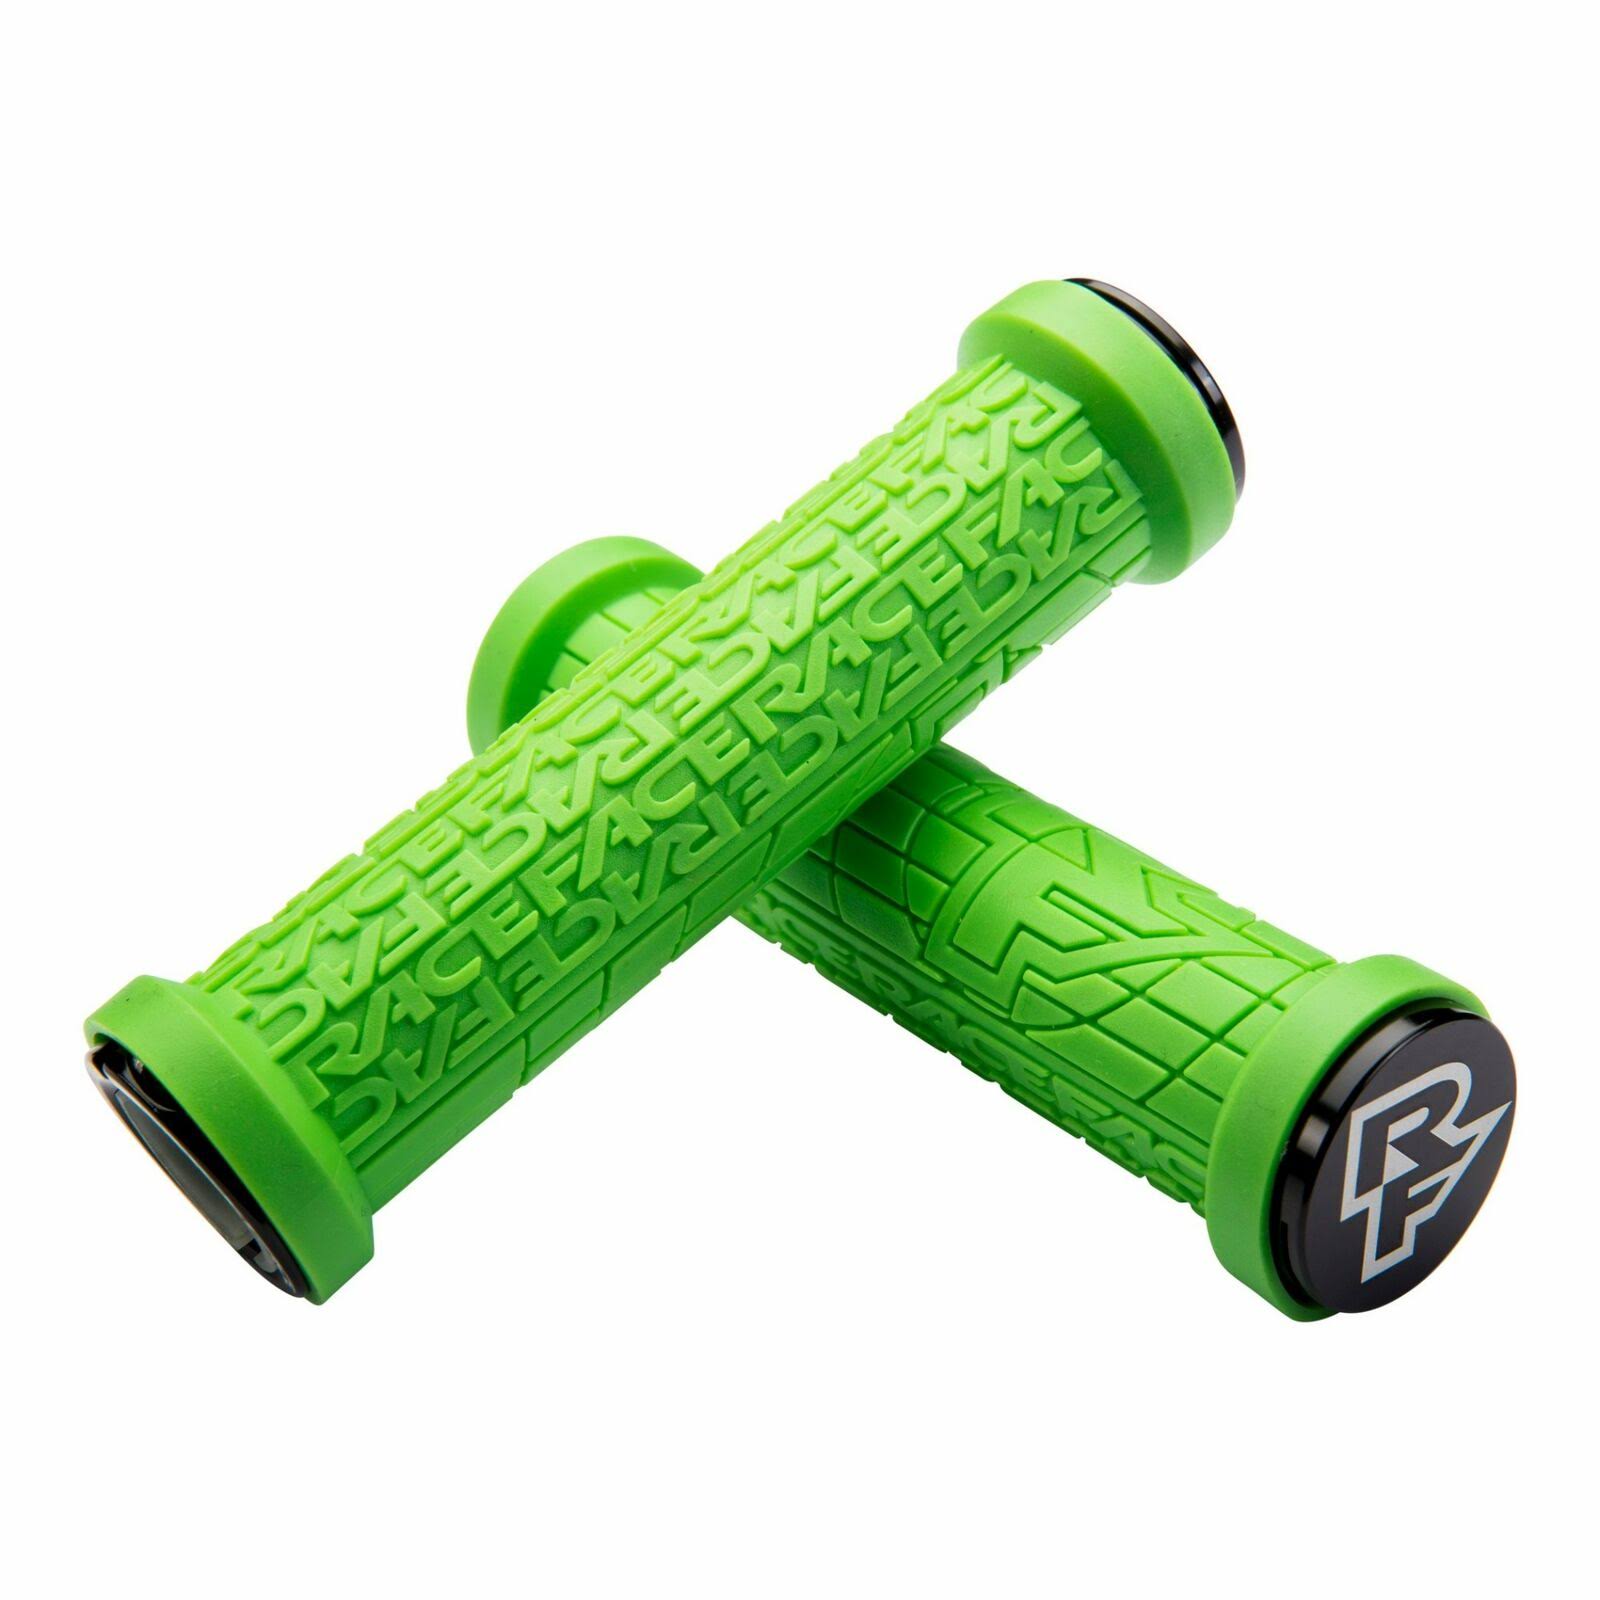 Raceface Grippler Lock-on Grip - Green, 33mm